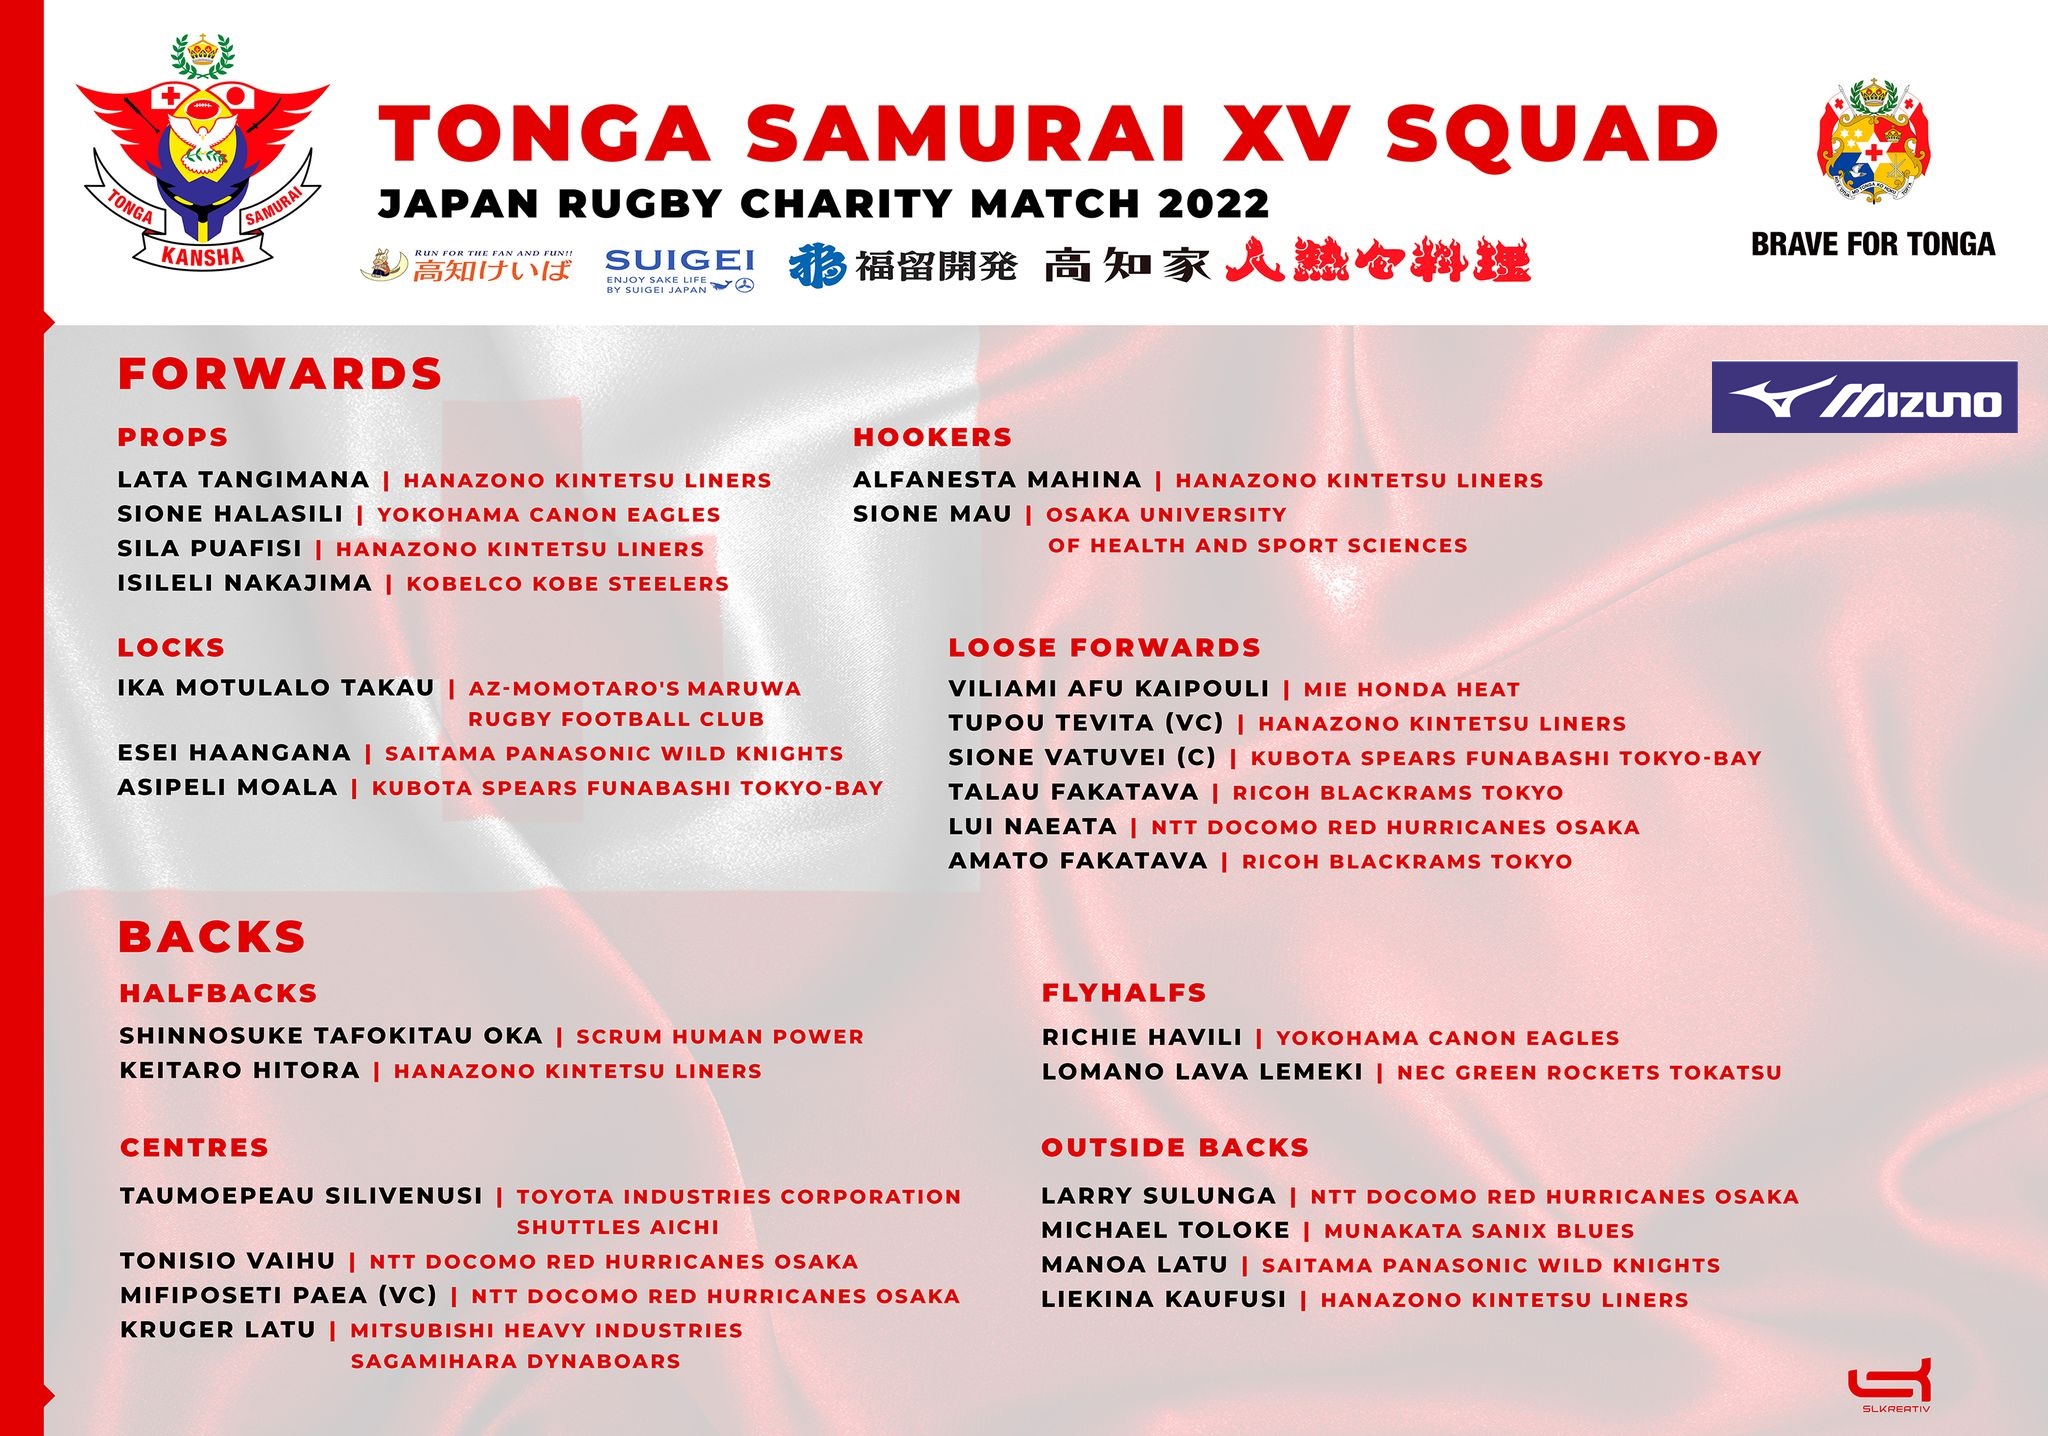 TONGA SAMURAI XVのスコッド